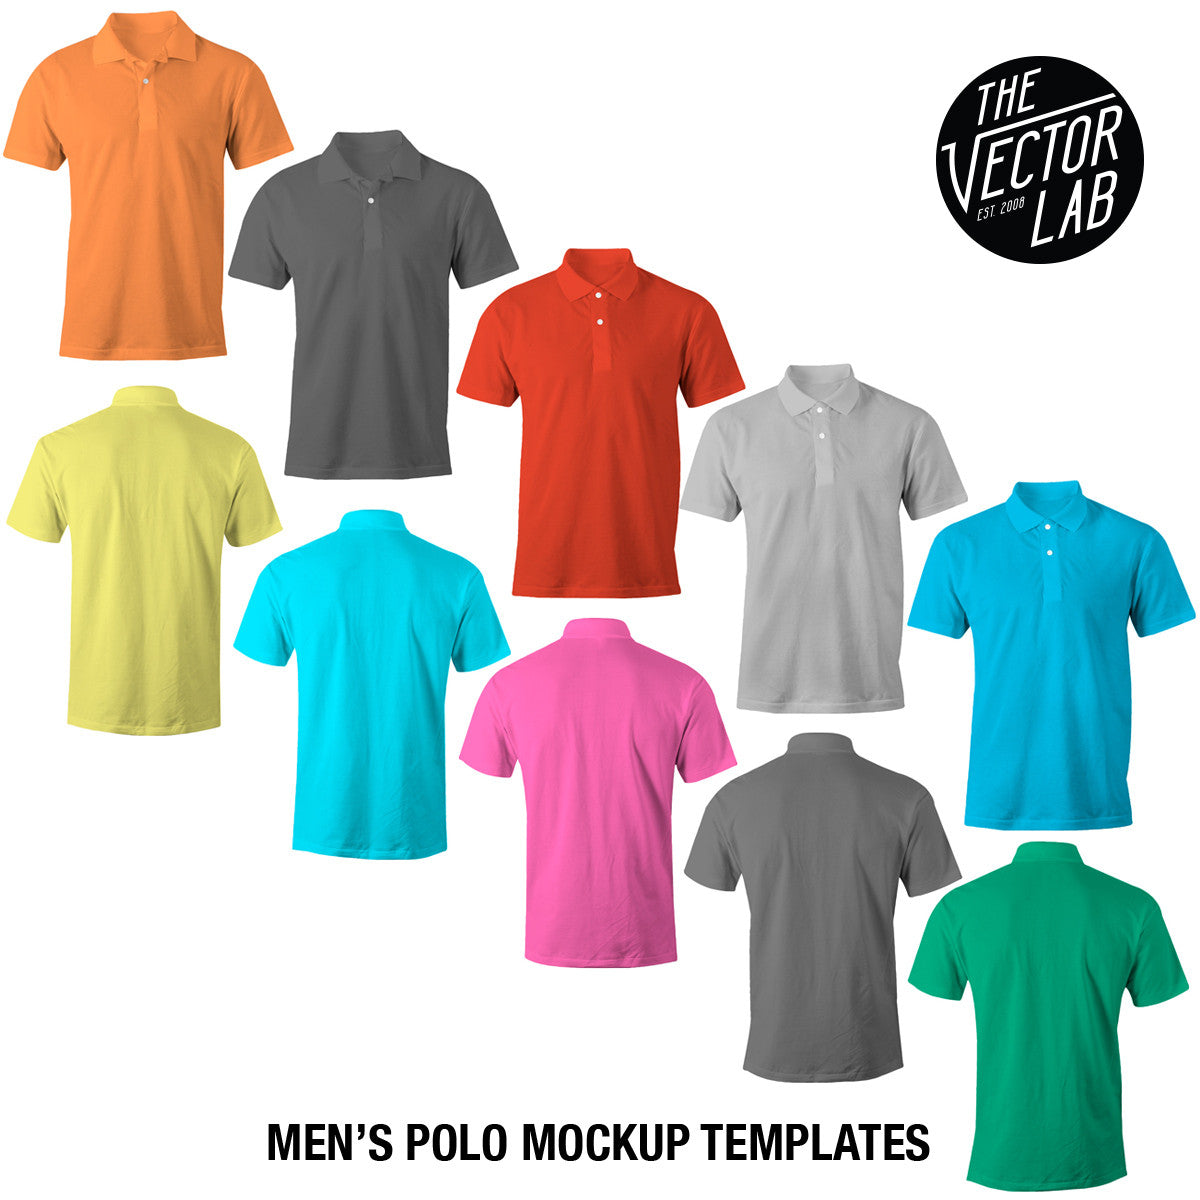 Download Men's Polo Mockup Templates - TheVectorLab